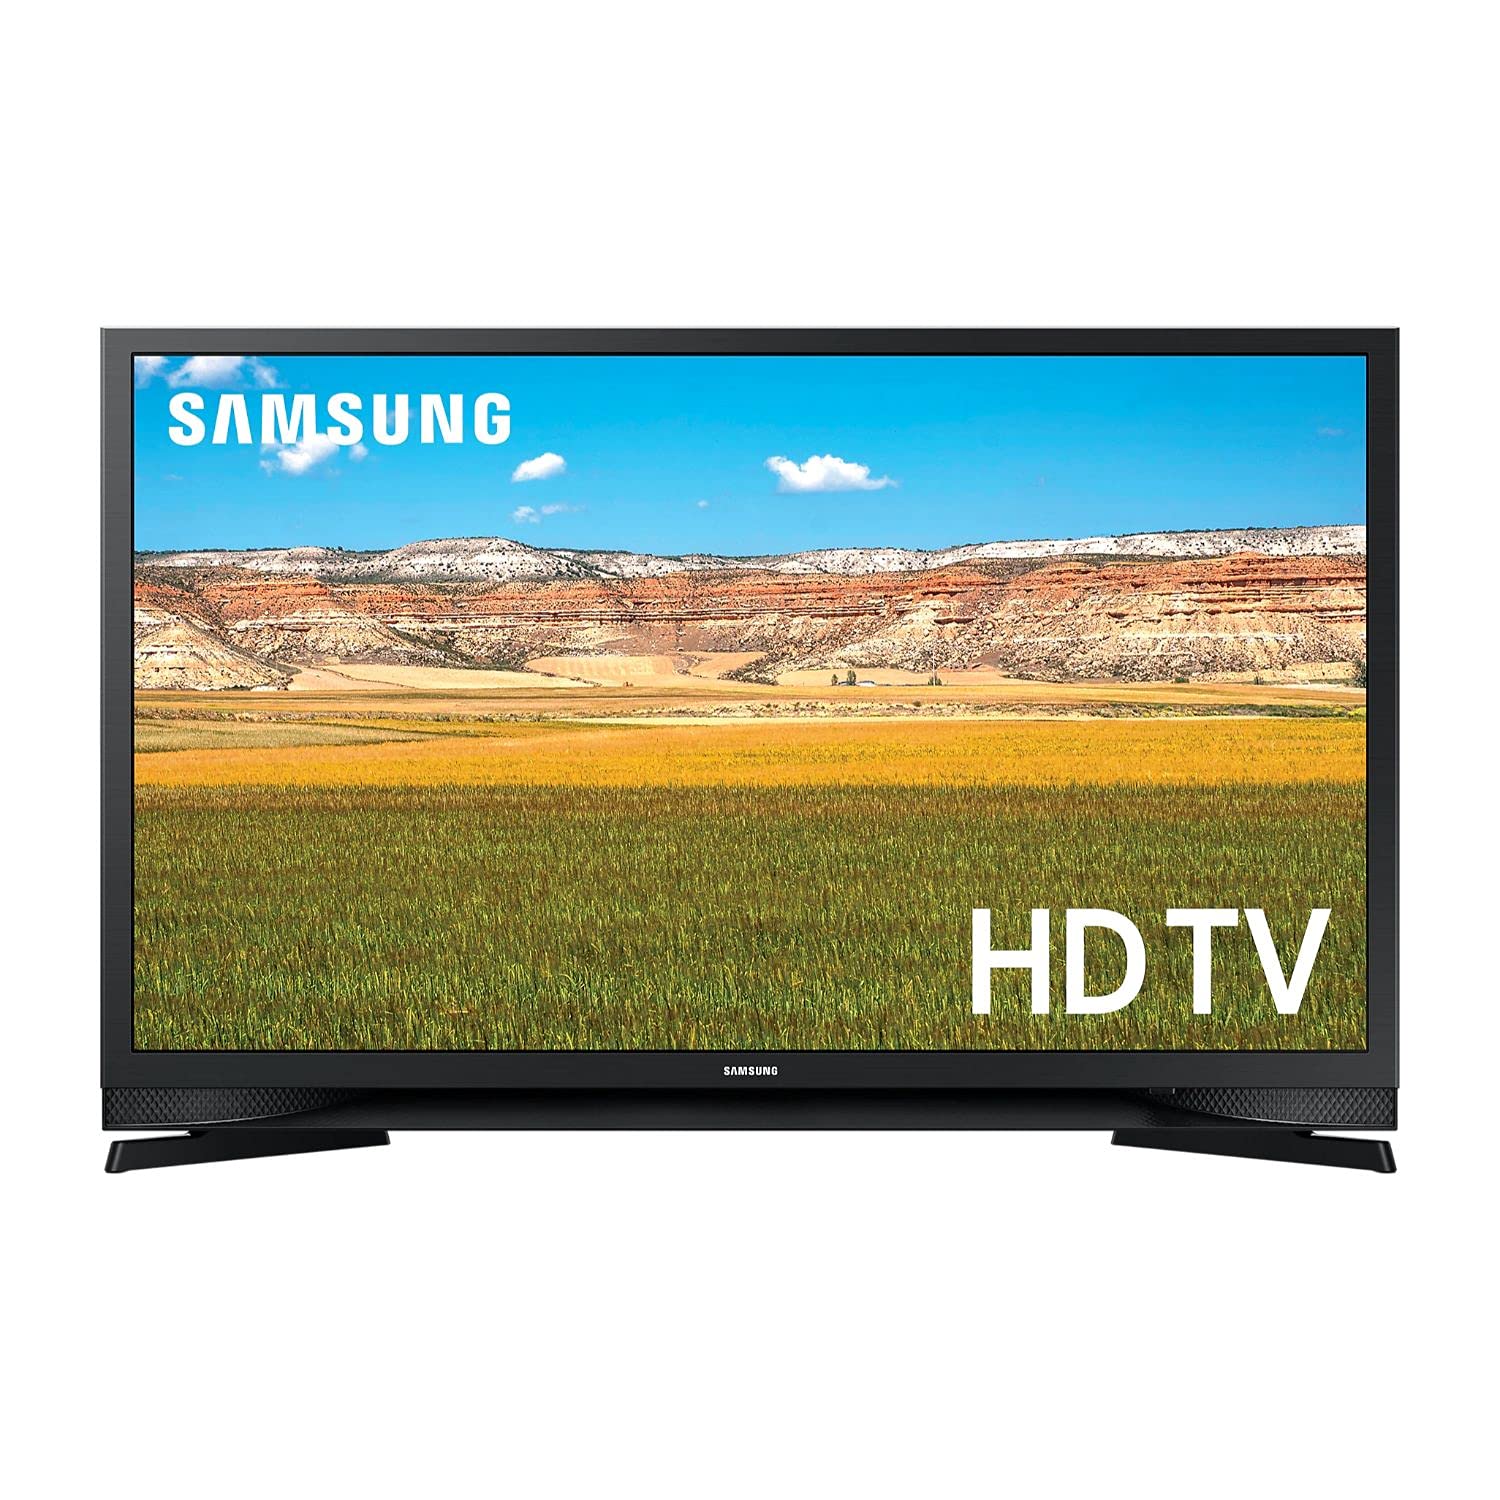 Samsung 80 cm (32 Inches) HD Ready Smart LED TV UA32T4600